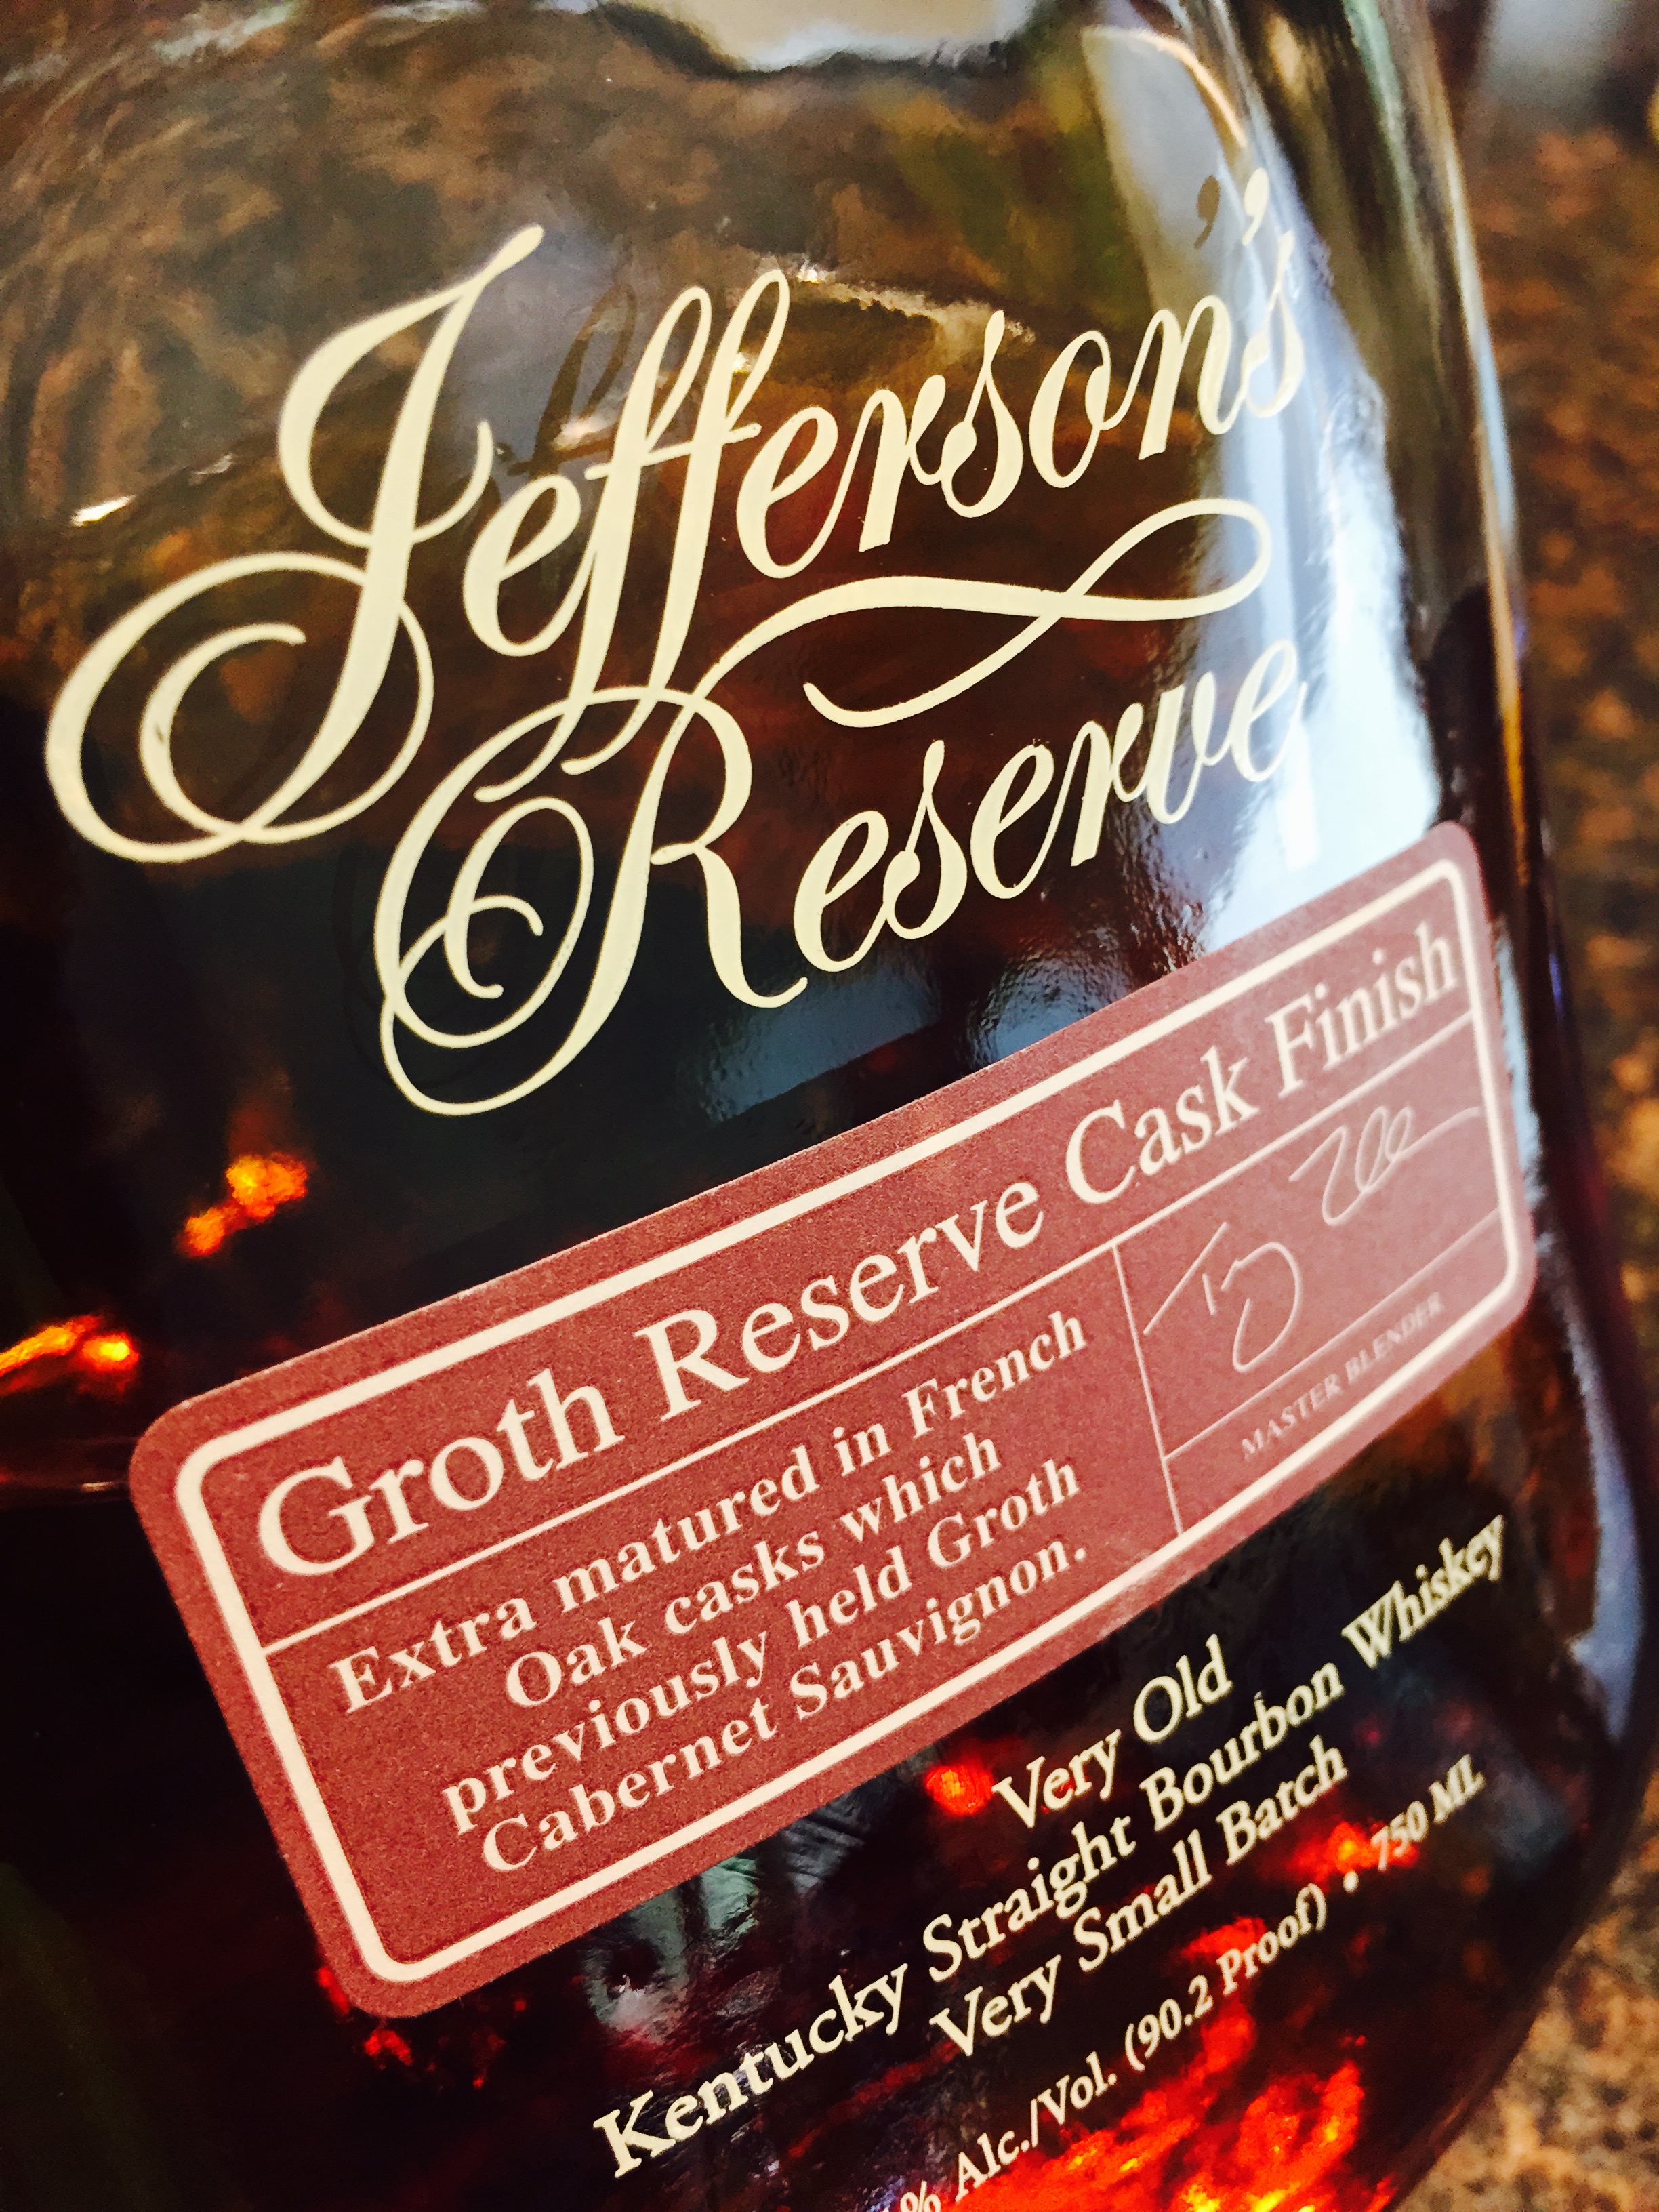 Jefferson's Reserve Groth Cask